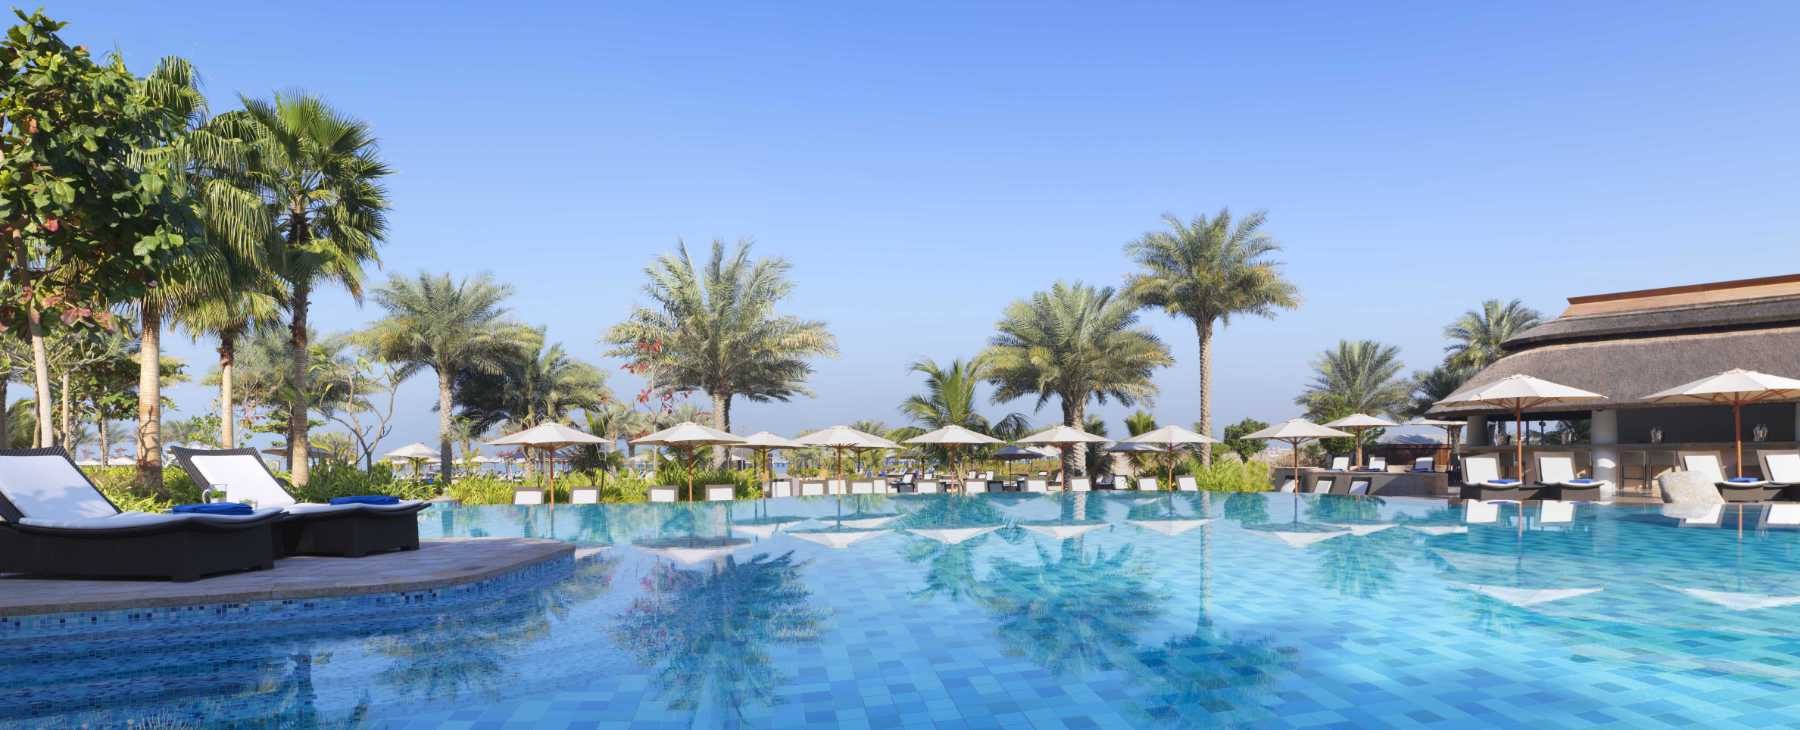 Luxushotel The Ritz Carlton Dubai